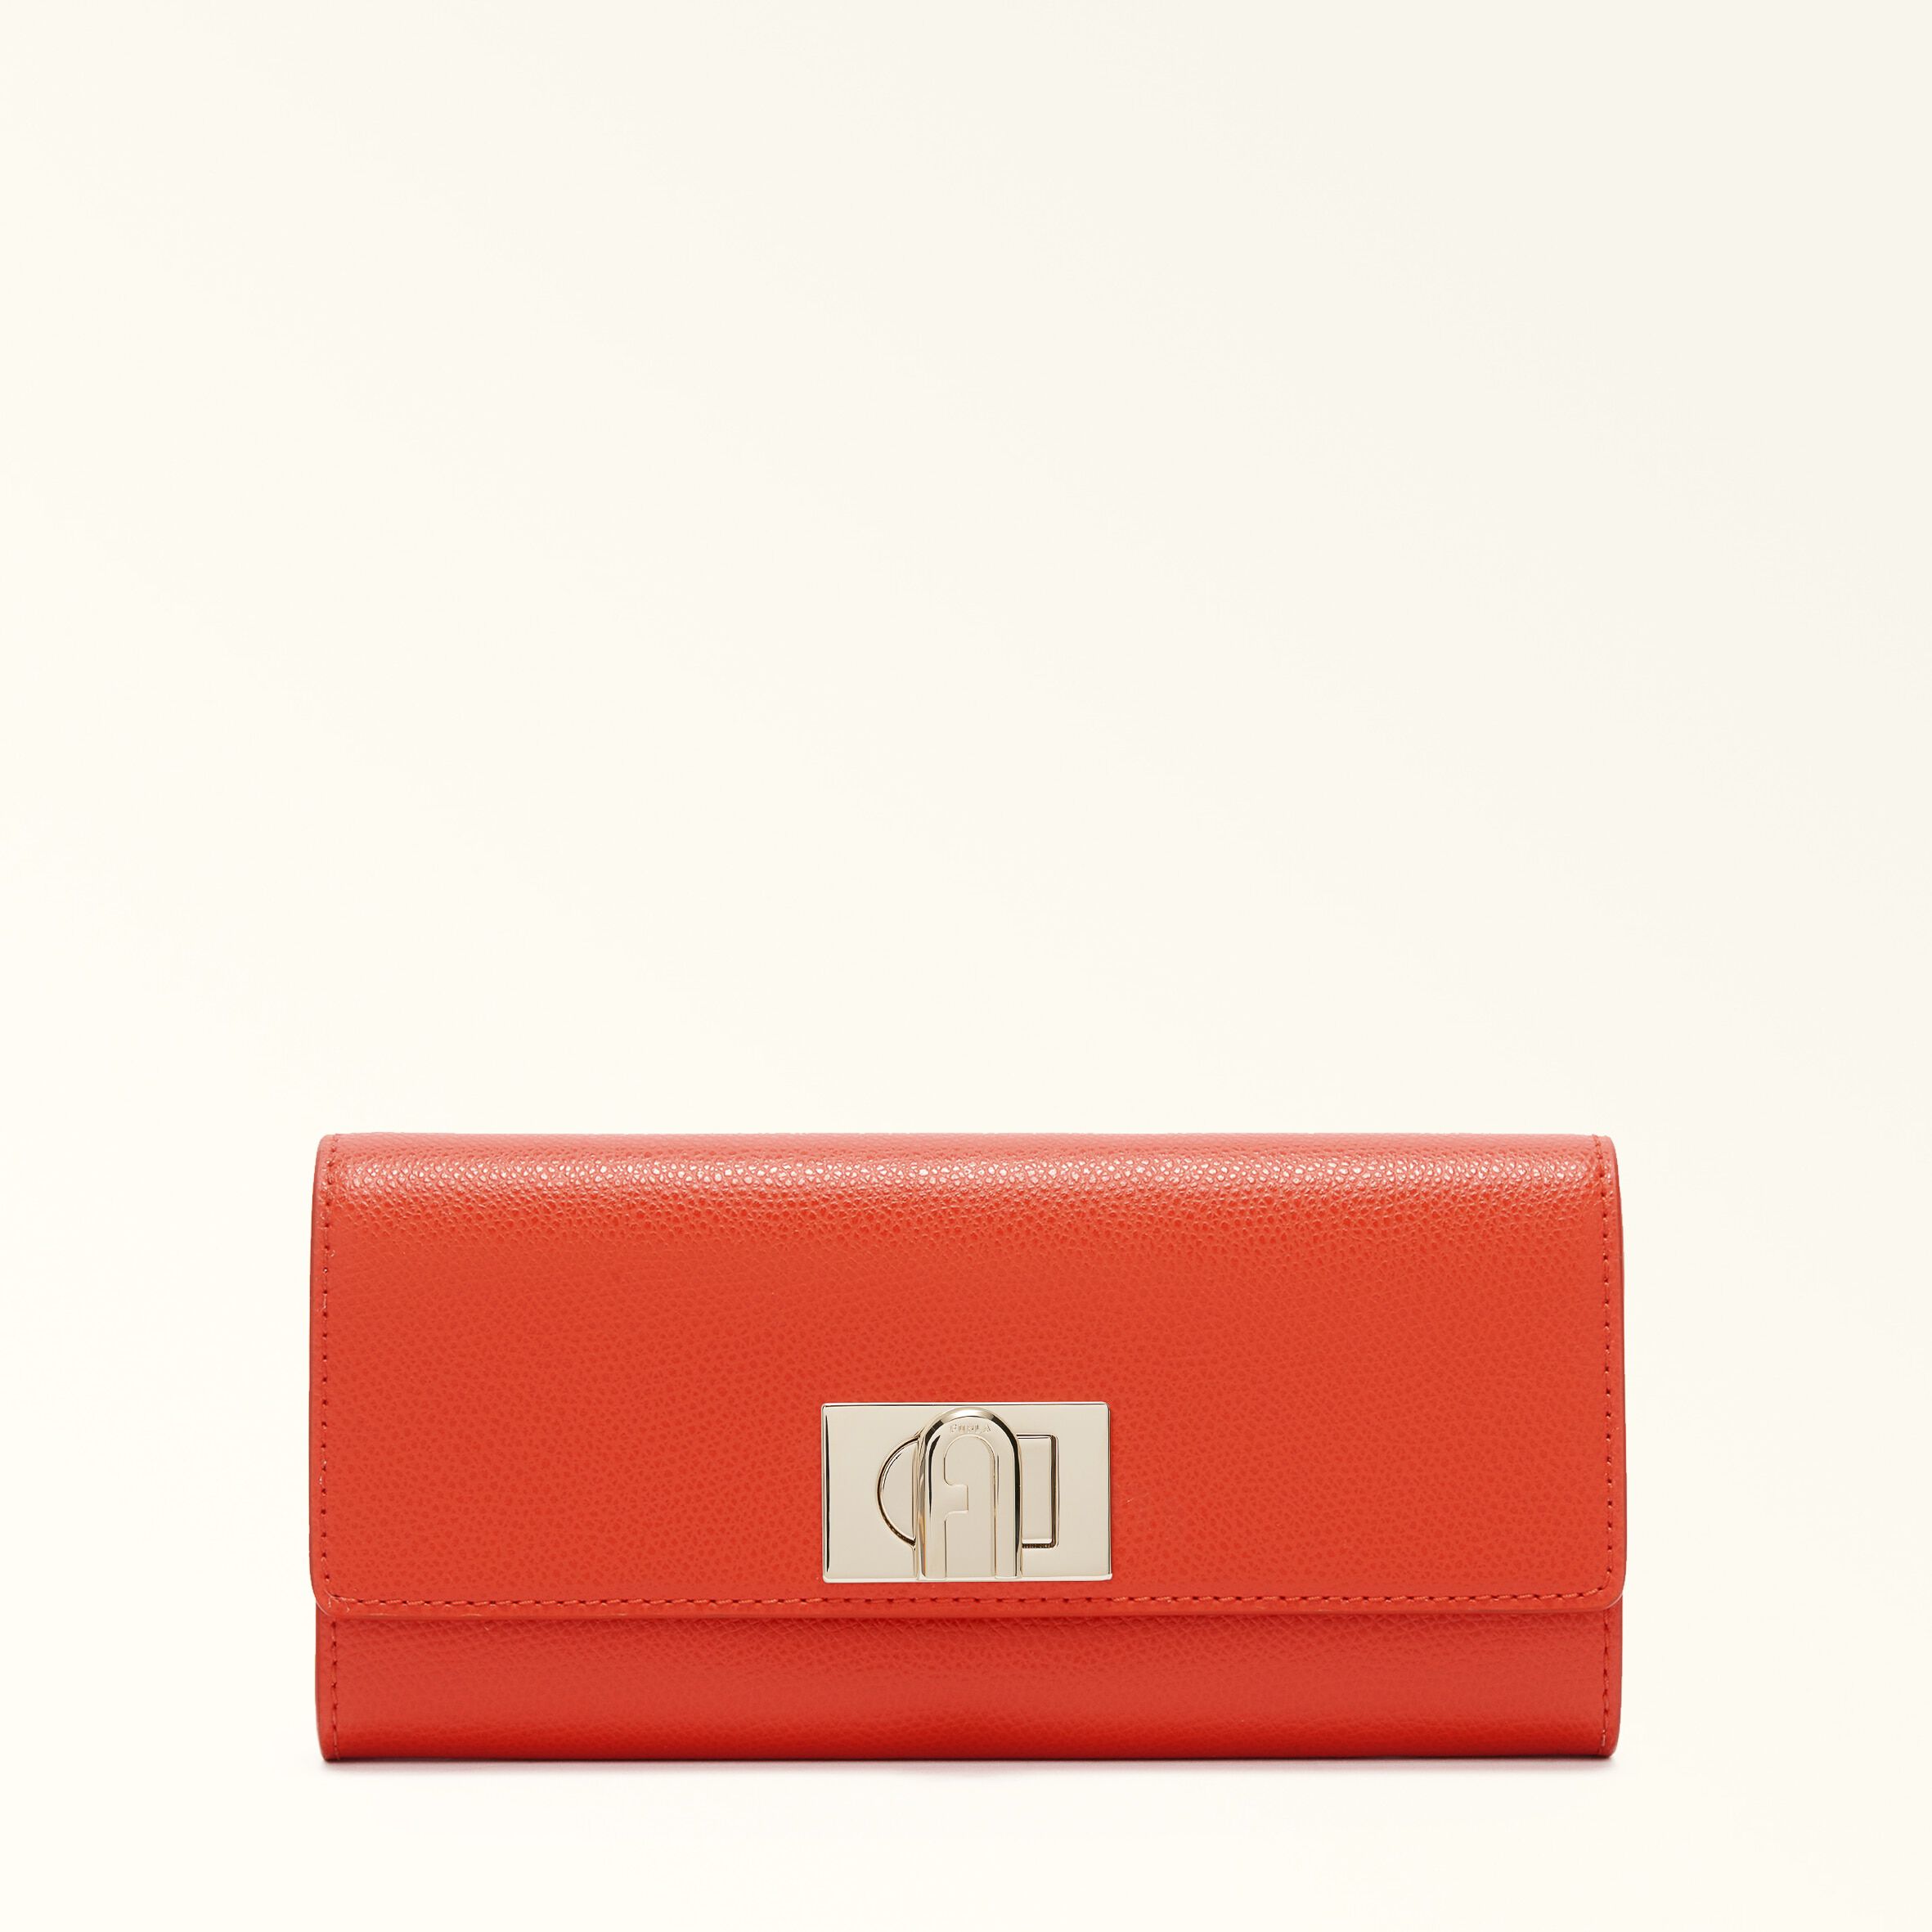 Women's leather wallets and purses : shop online | Furla